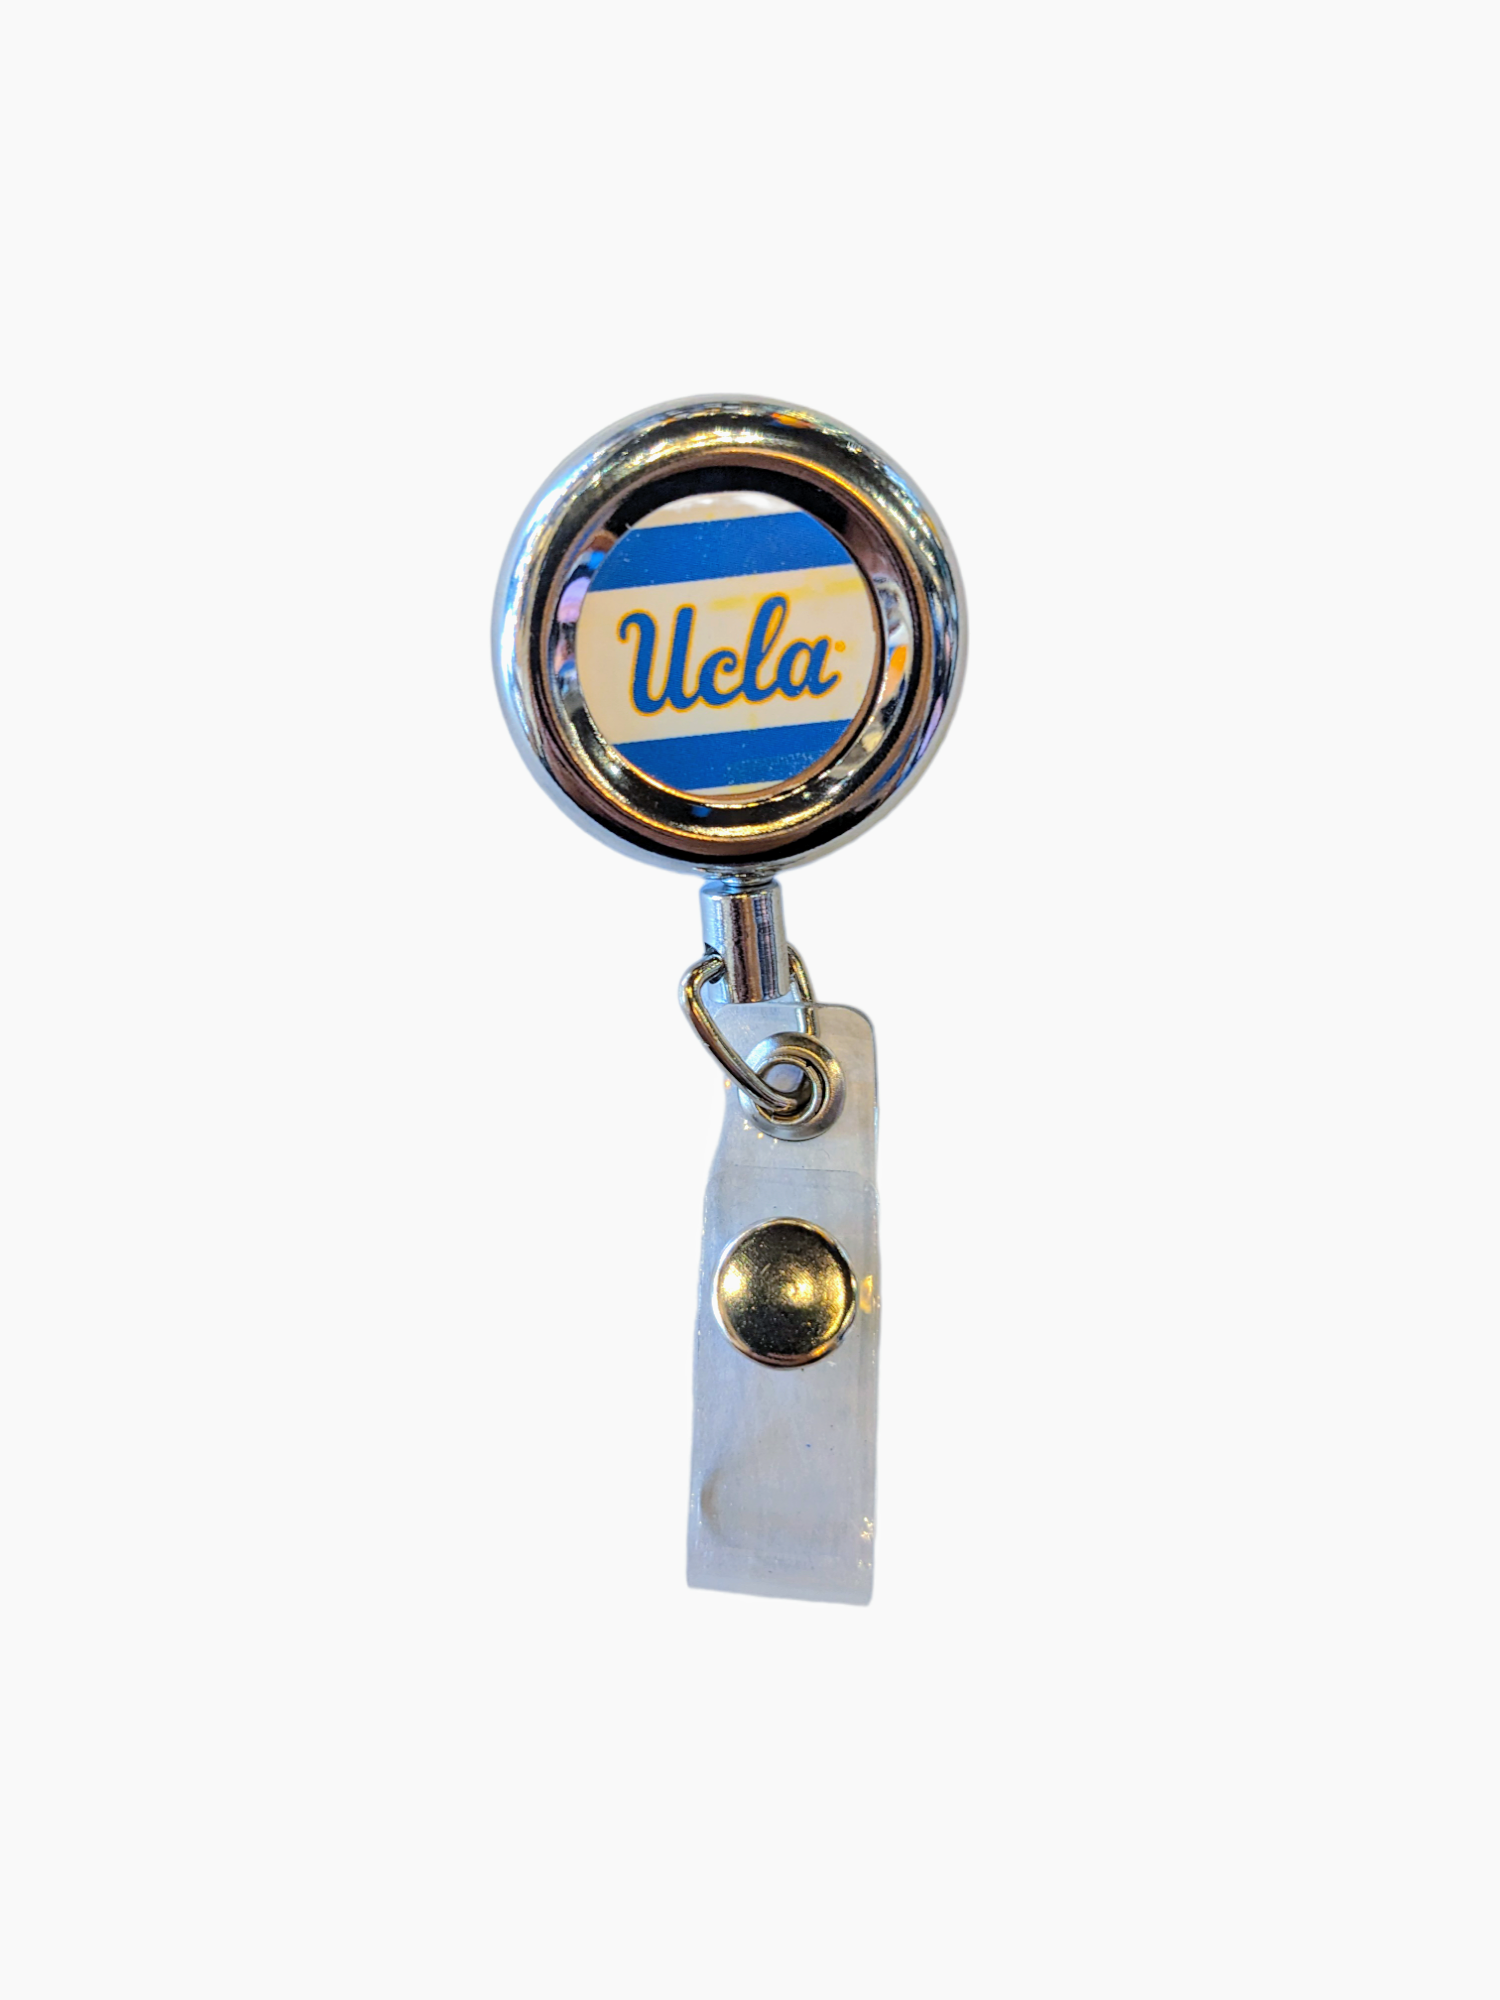 UCLA Retractable Badge Holder Blue - Campus Store